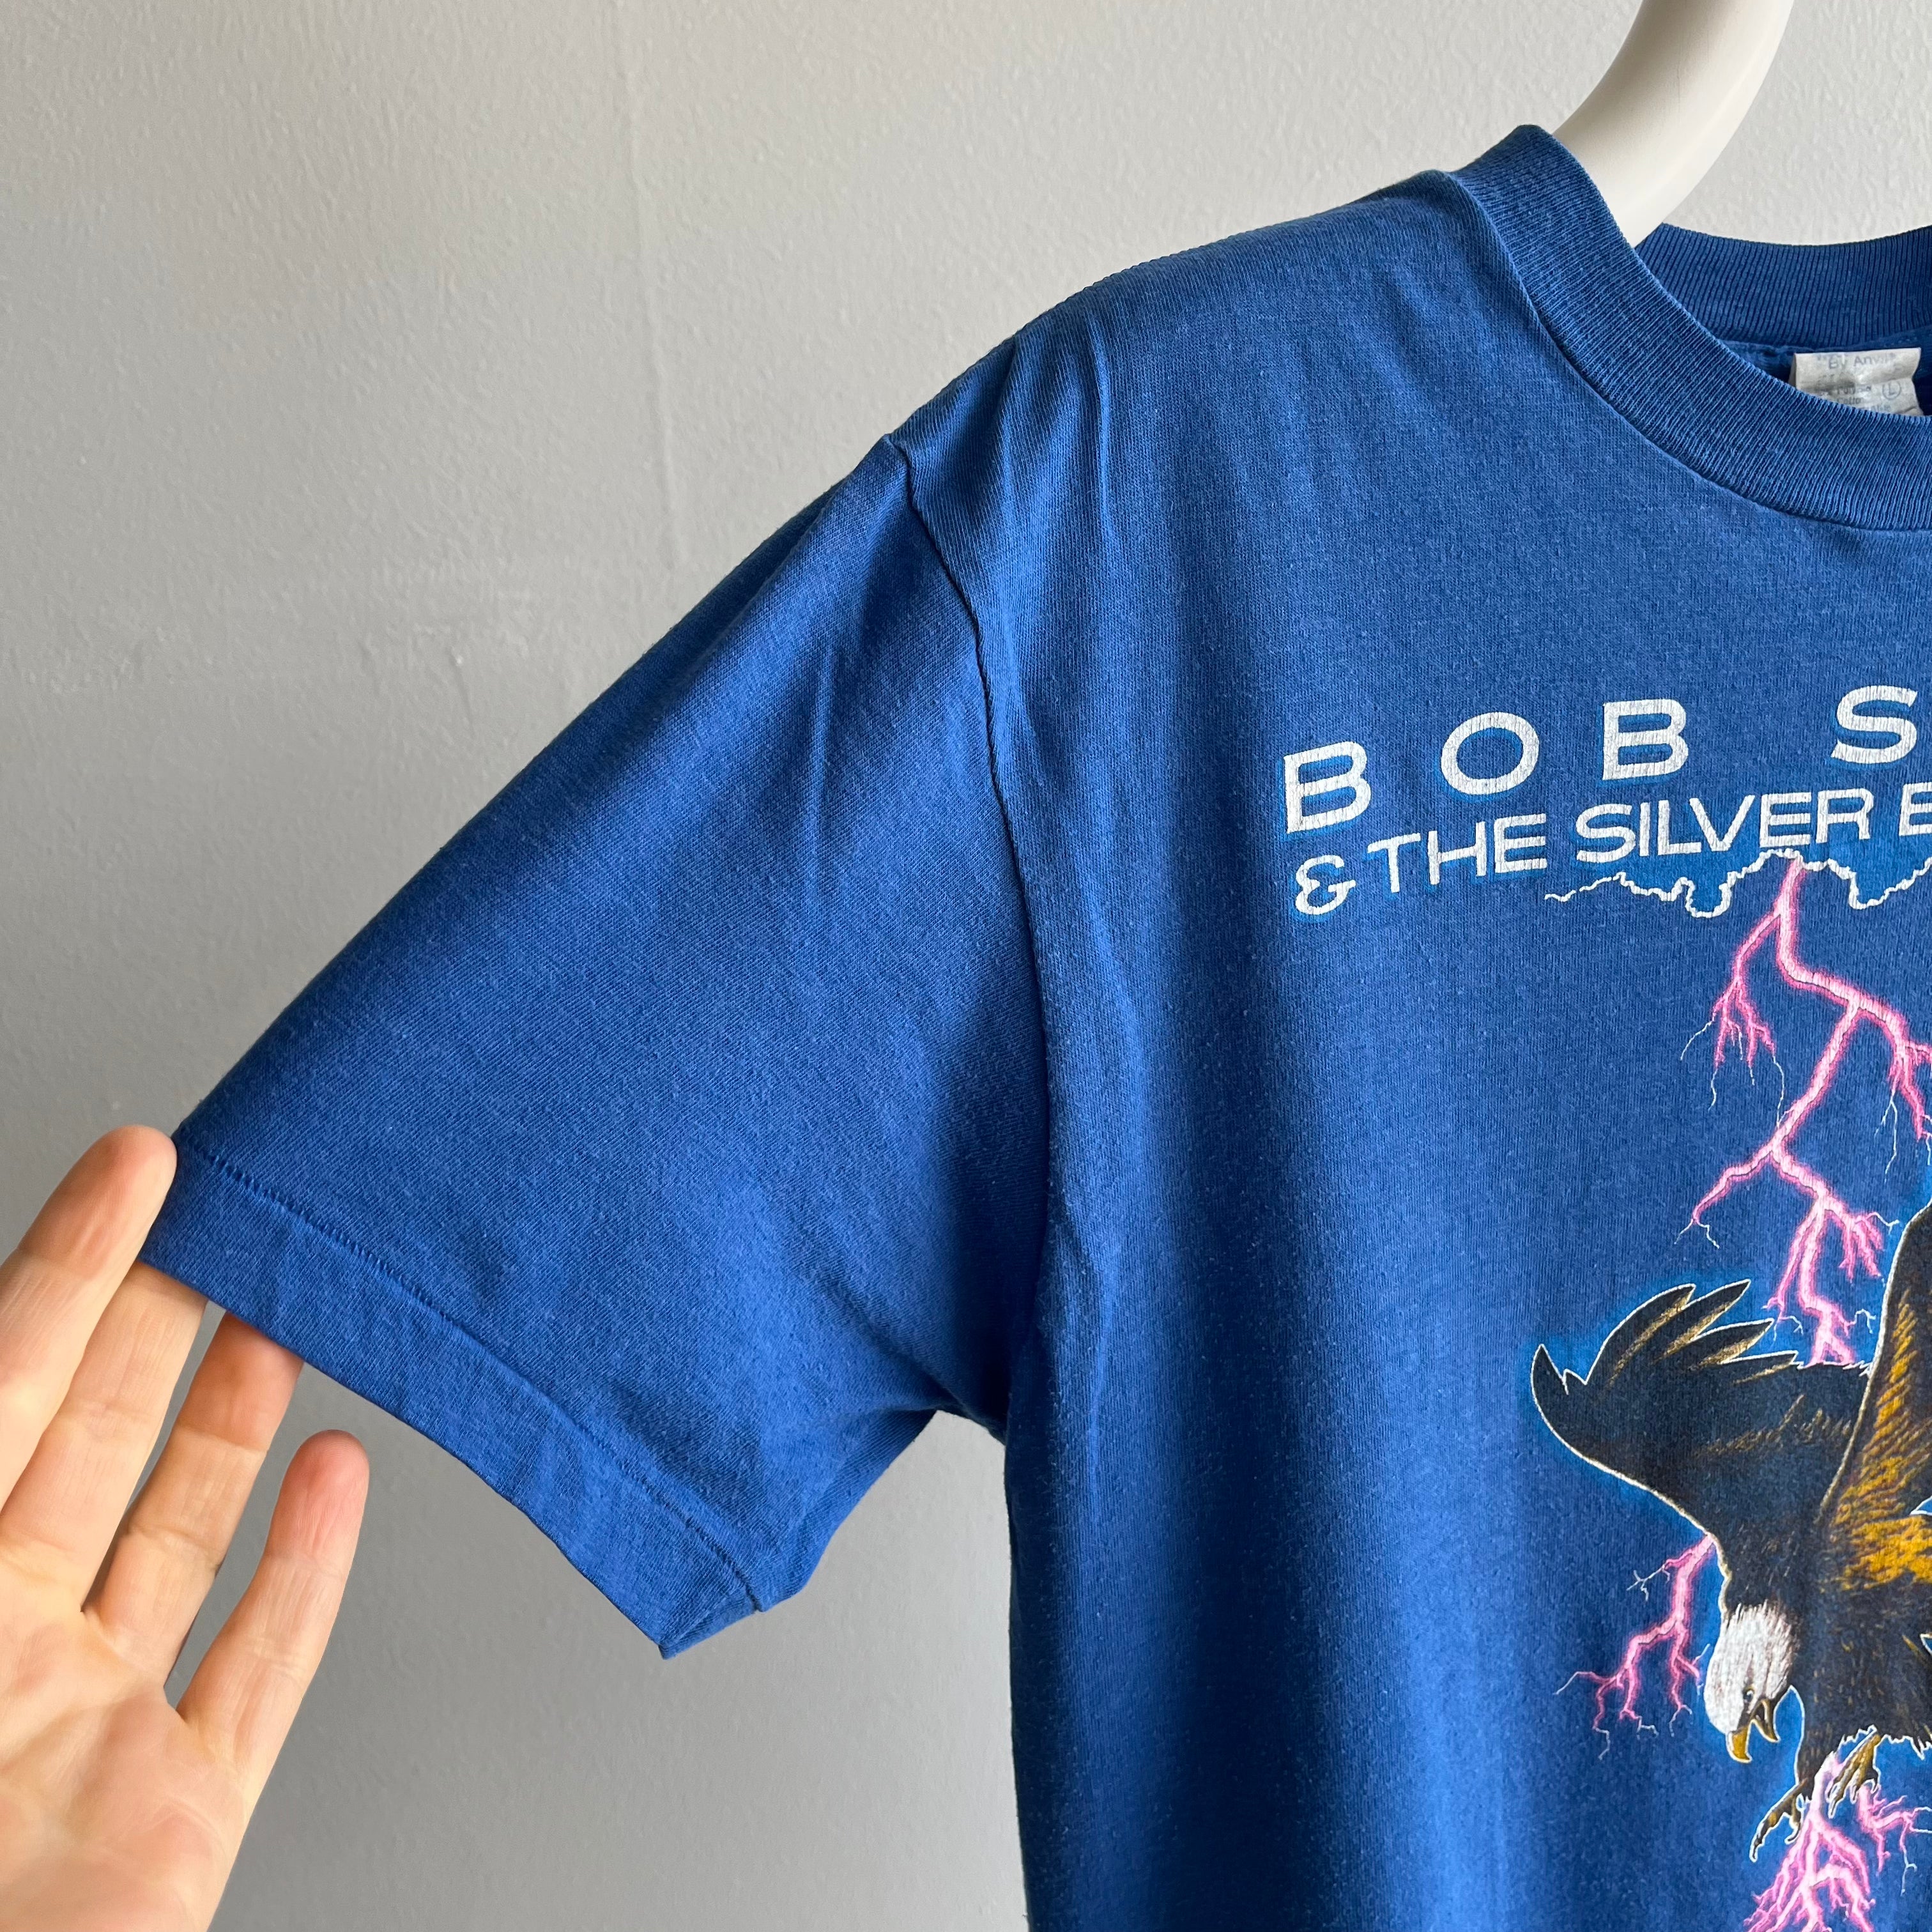 1986 Bob Seger and The Silver Bullet Band T-Shirt